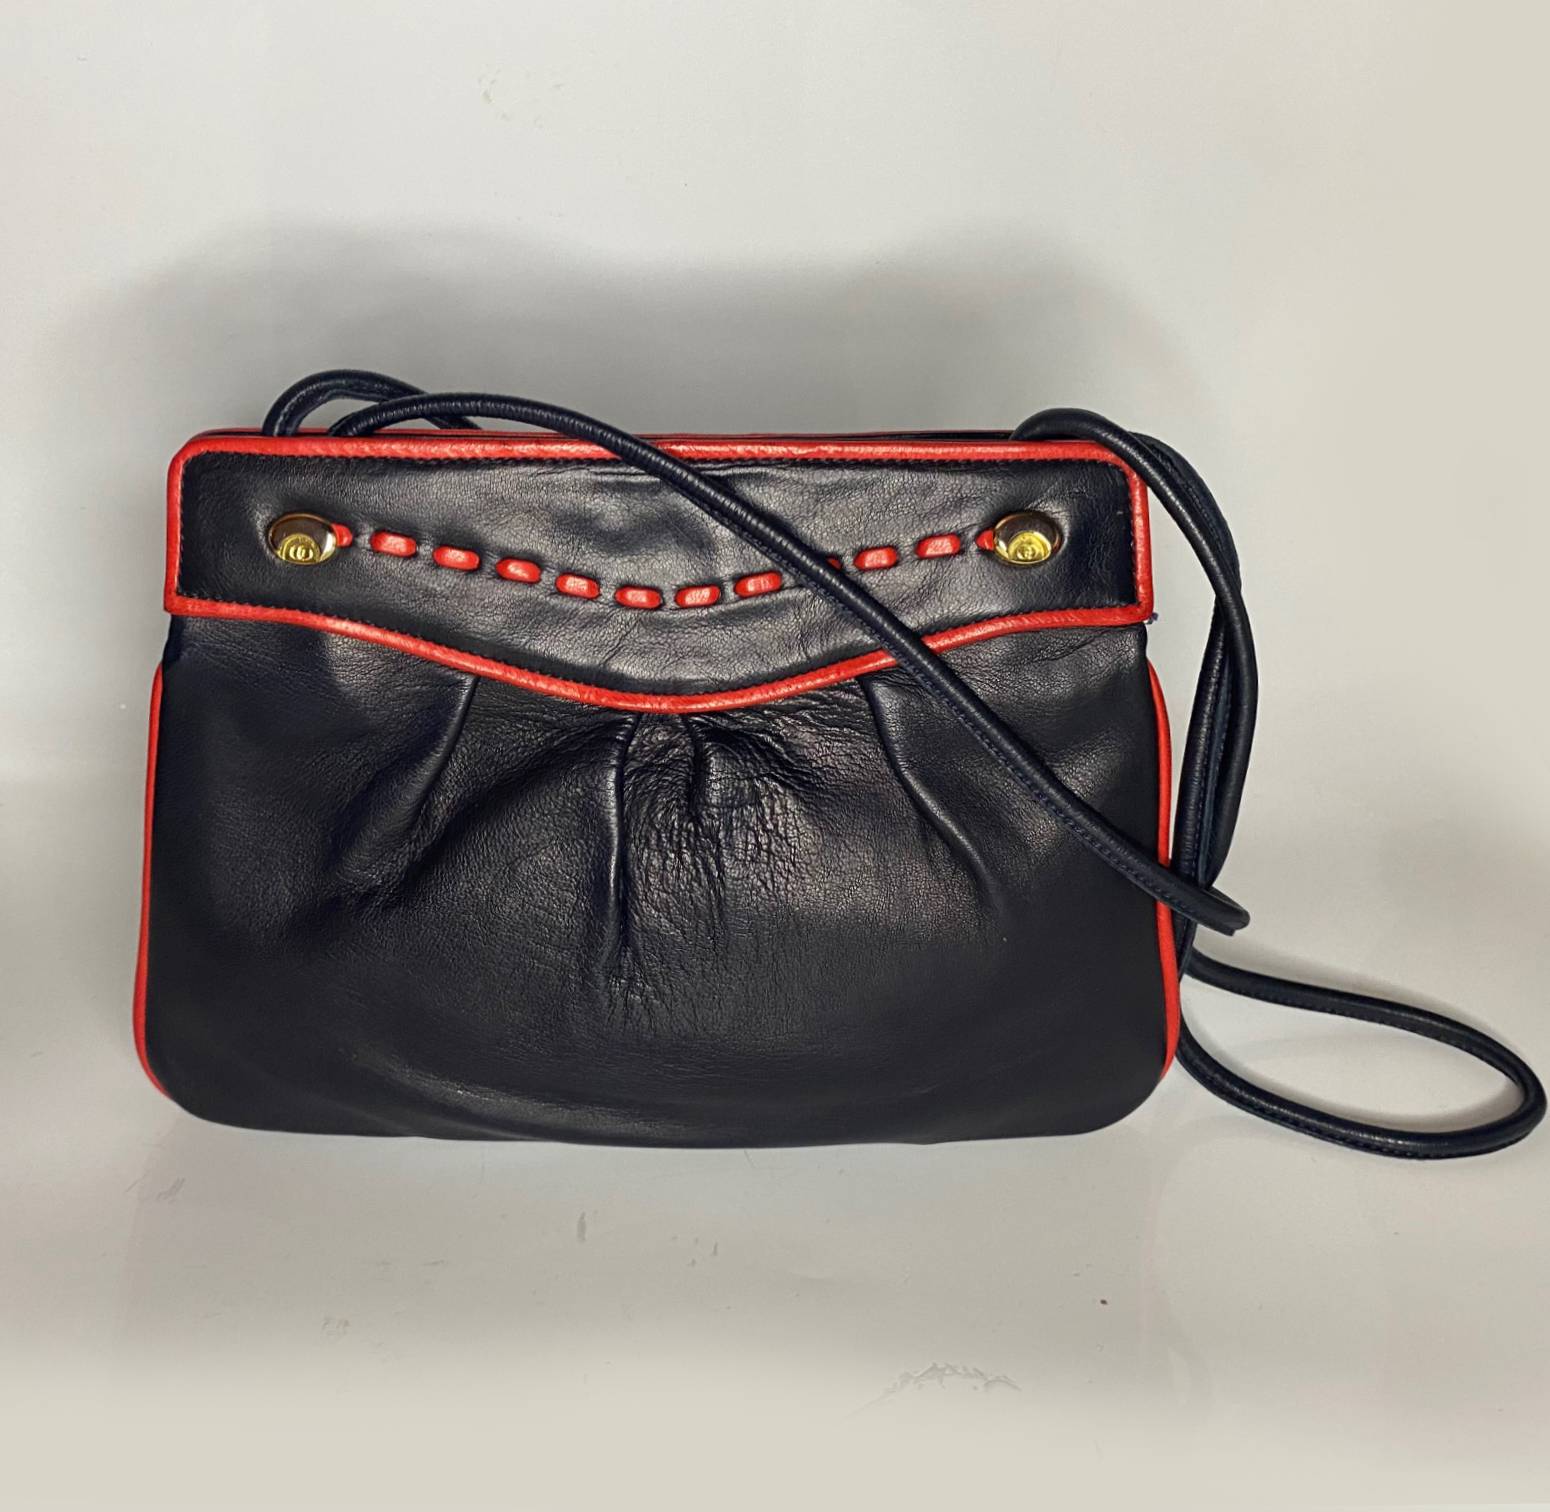 1960s Gucci Black Leather Double Strap Shoulder Bag - style - CHNGR